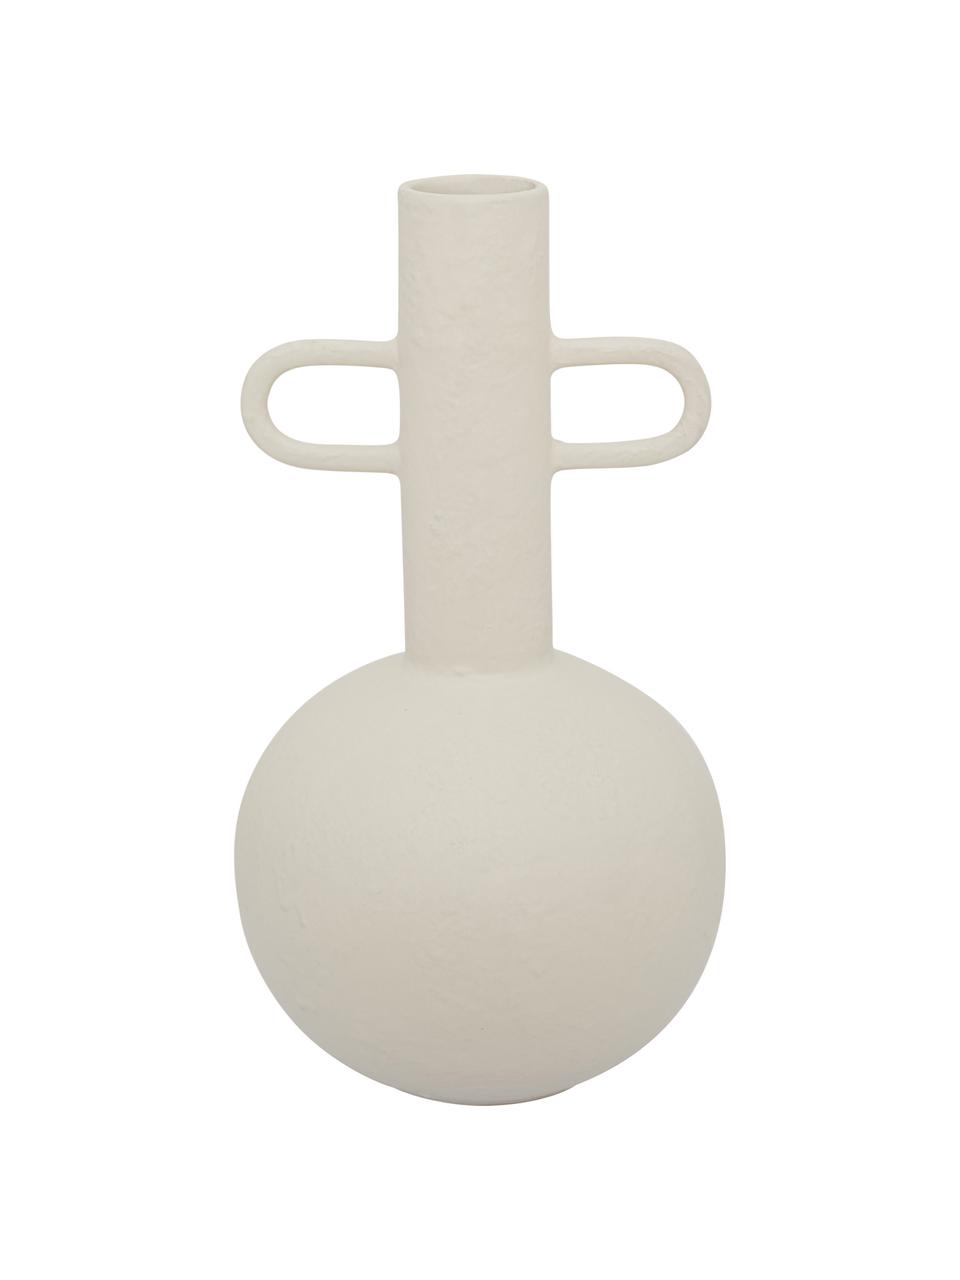 Vase grès blanc crème Kindness, Grès cérame, Blanc crème, mat, Ø 18 x haut. 32 cm